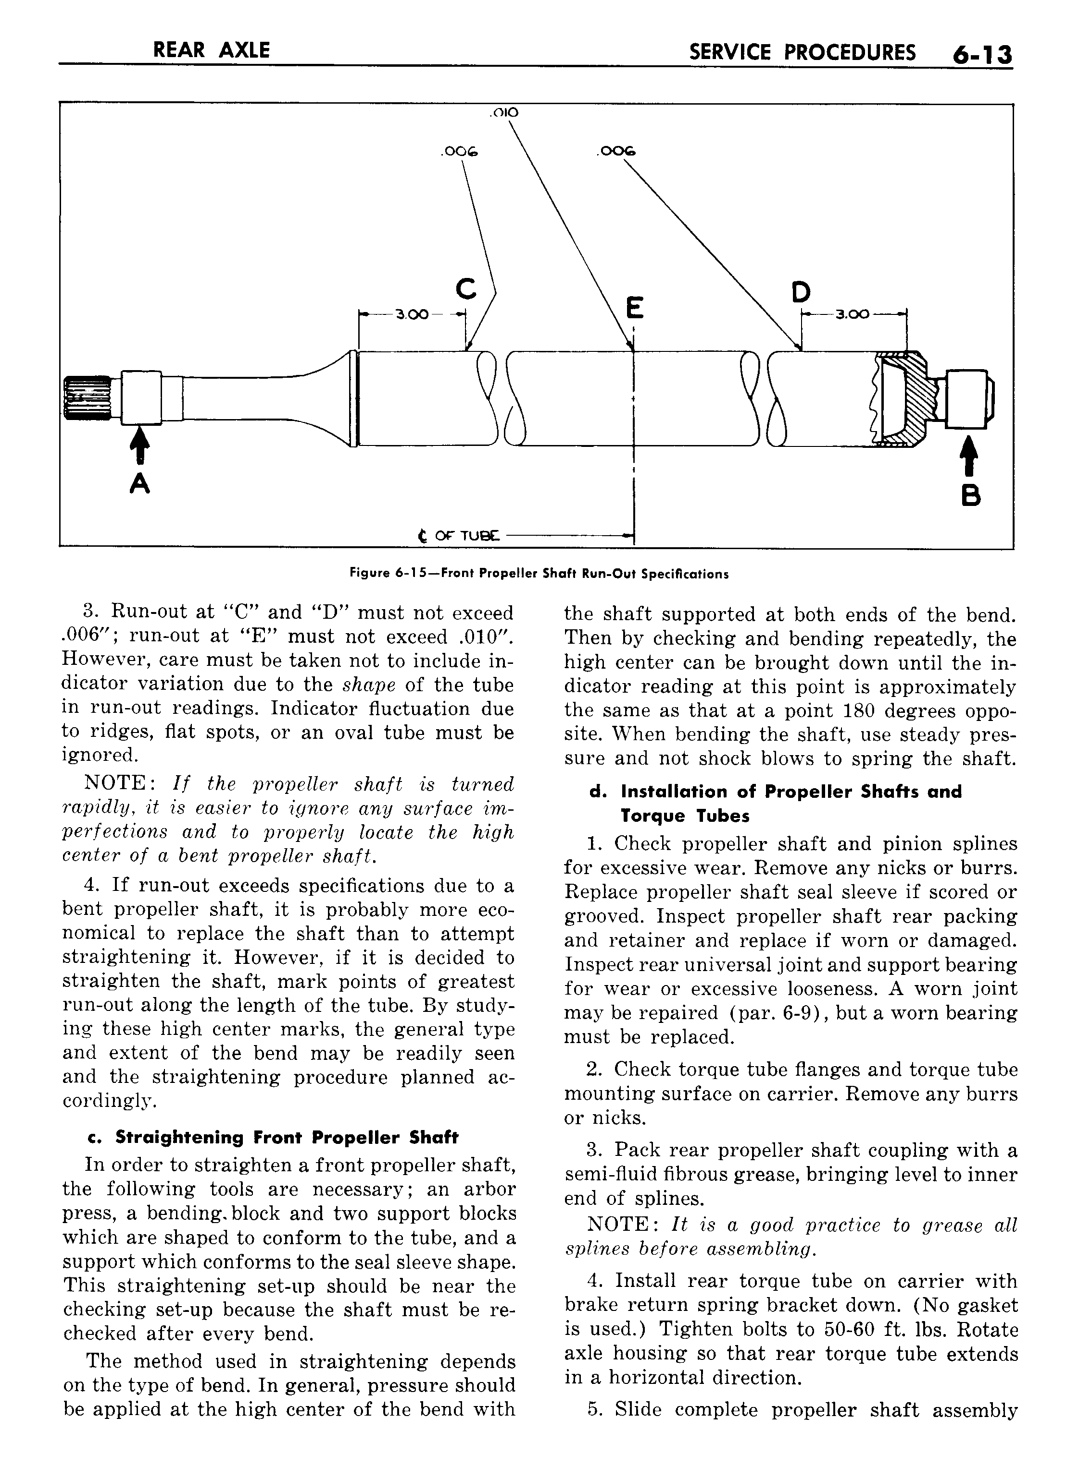 n_07 1957 Buick Shop Manual - Rear Axle-013-013.jpg